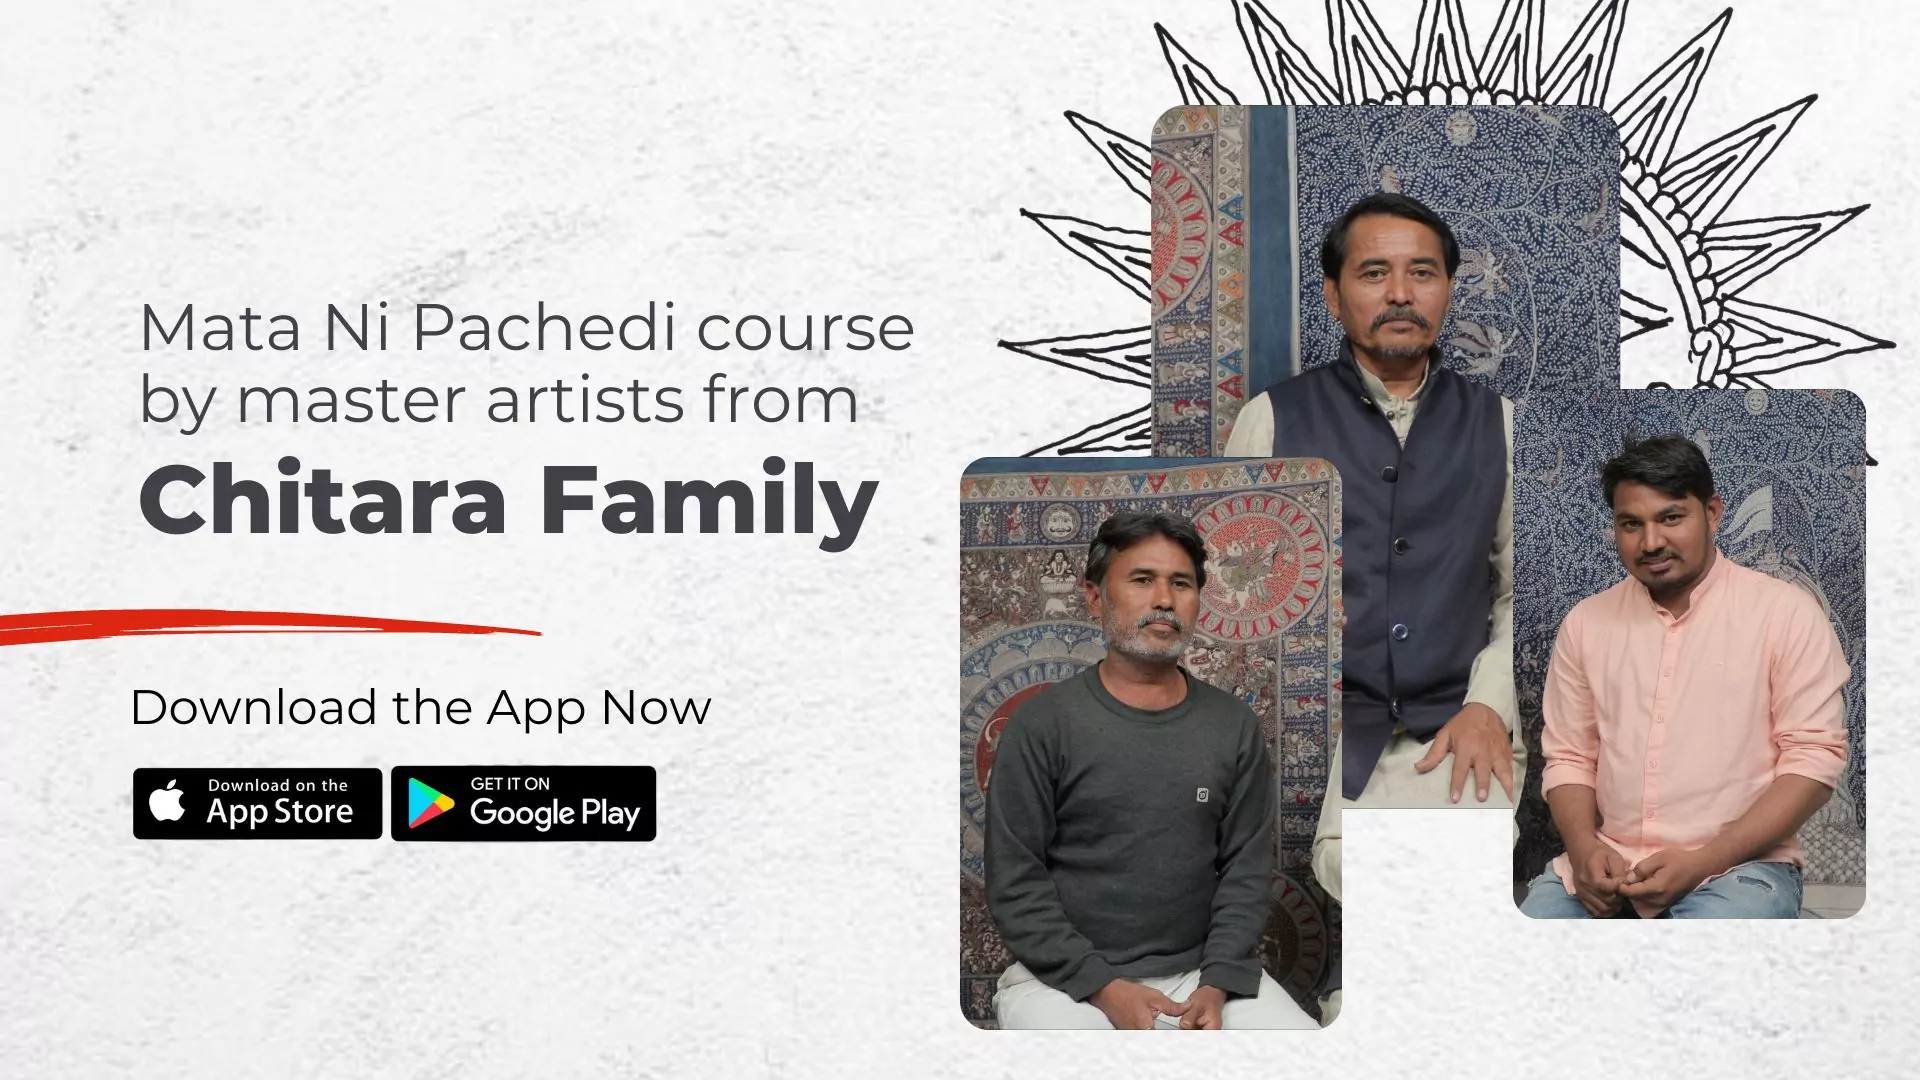 Learn Mata Ni Pachedi course online